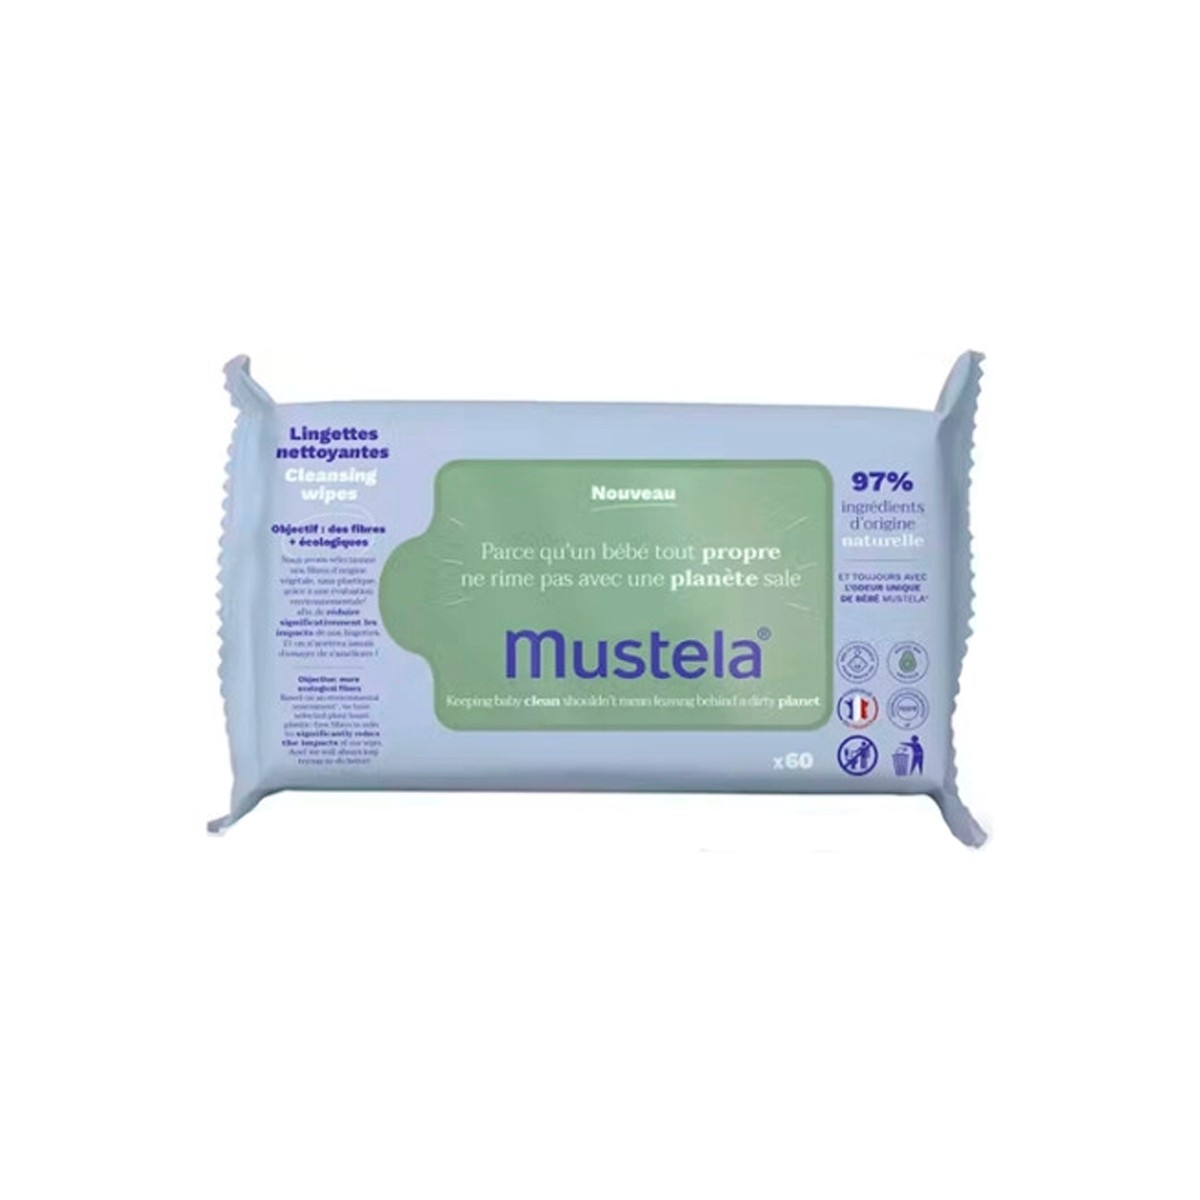 Comprar Mustela Toallitas húmedas 60 toallitas al mejor precio